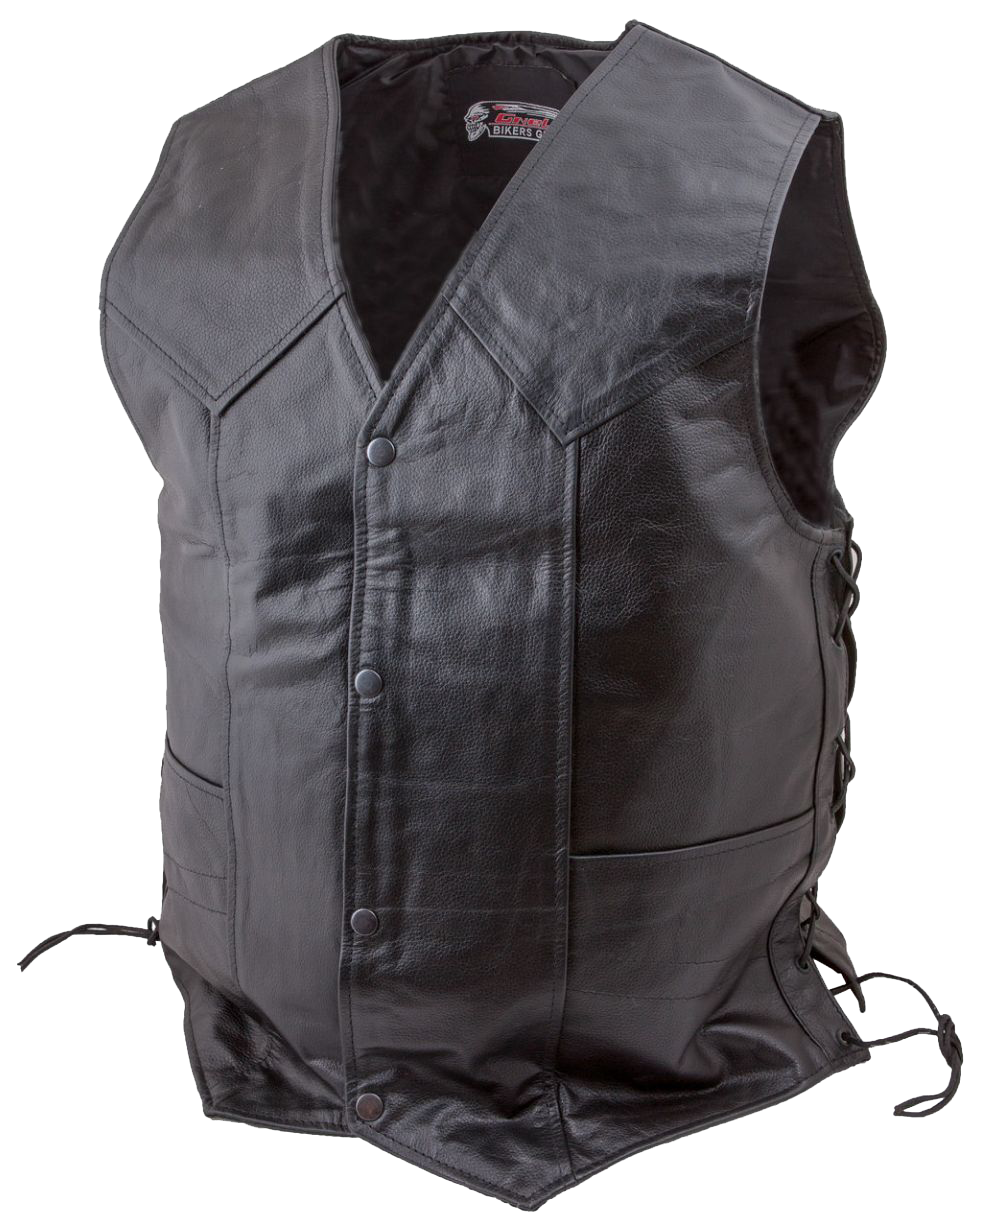 Leather Motorcycle Vest (Side Lace) - V178